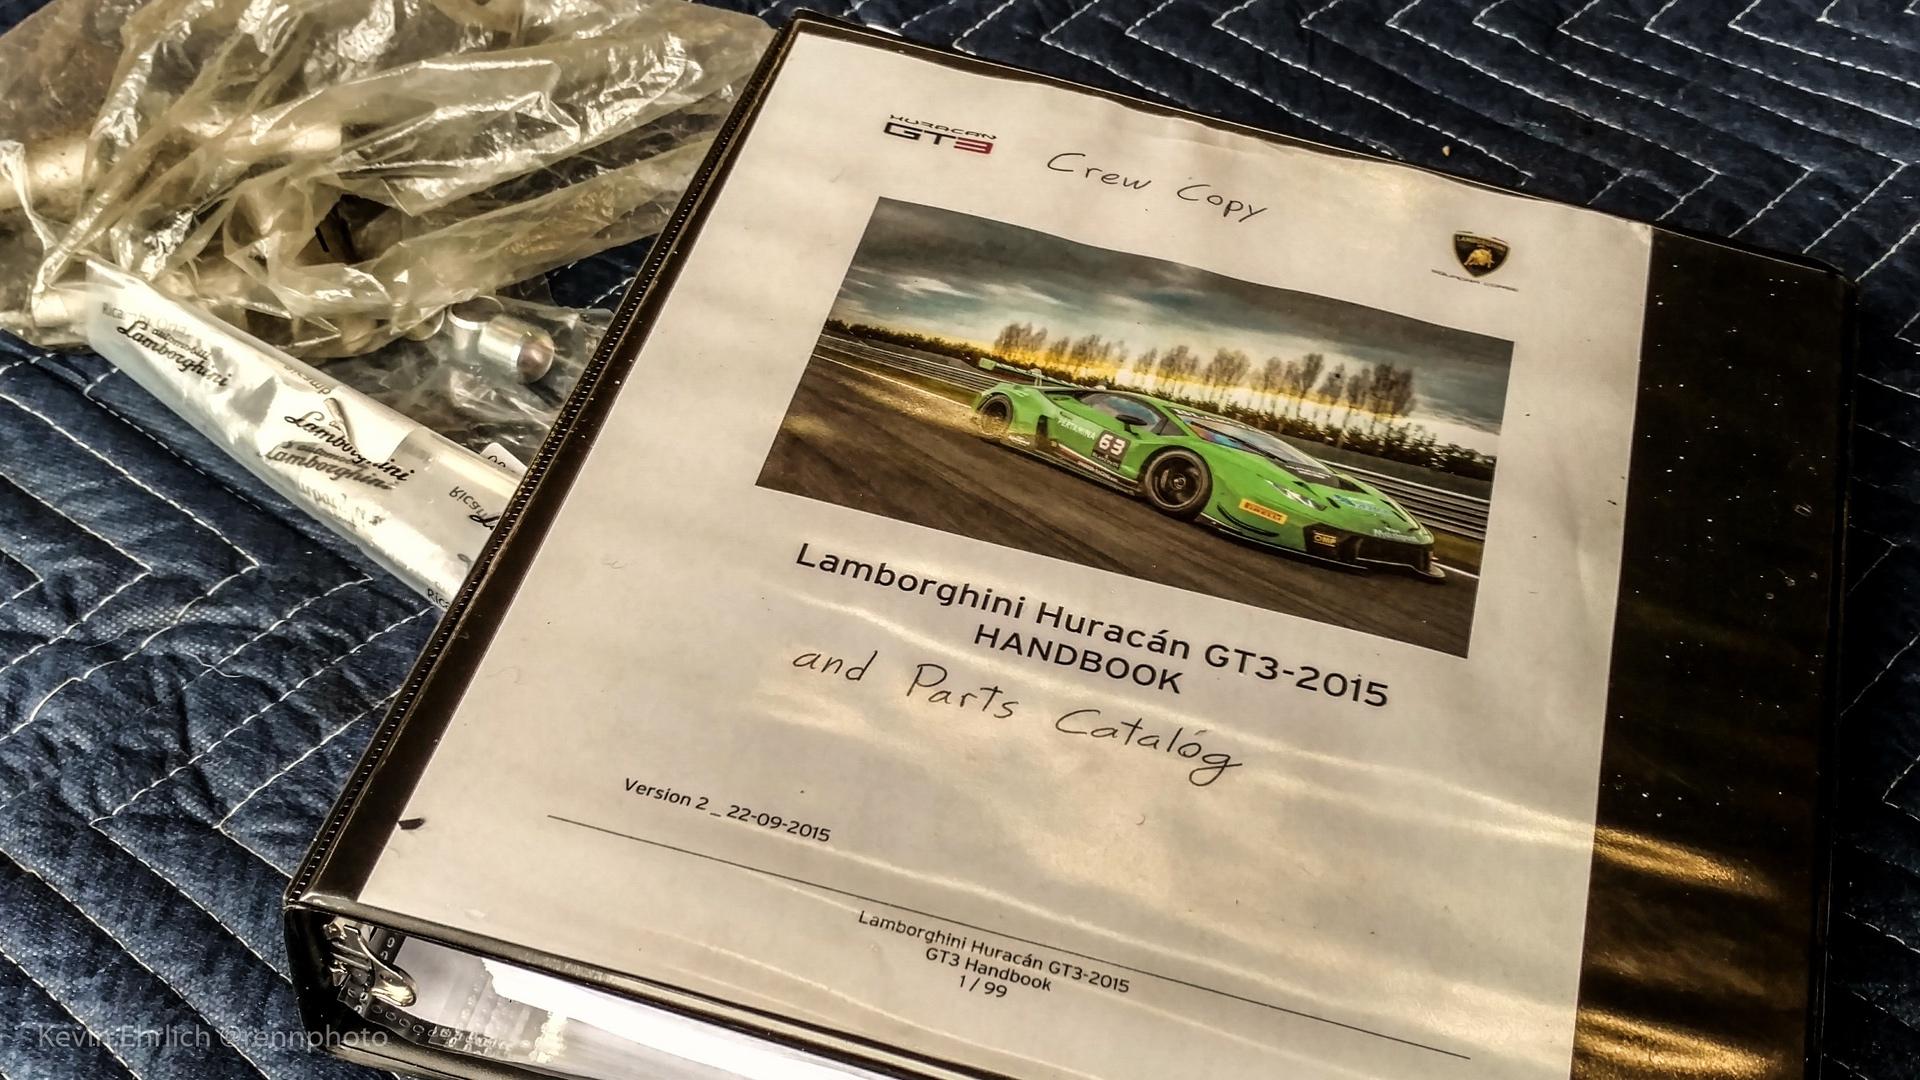 Photo of Lamborghini Huracan GT3-2015 Handbook